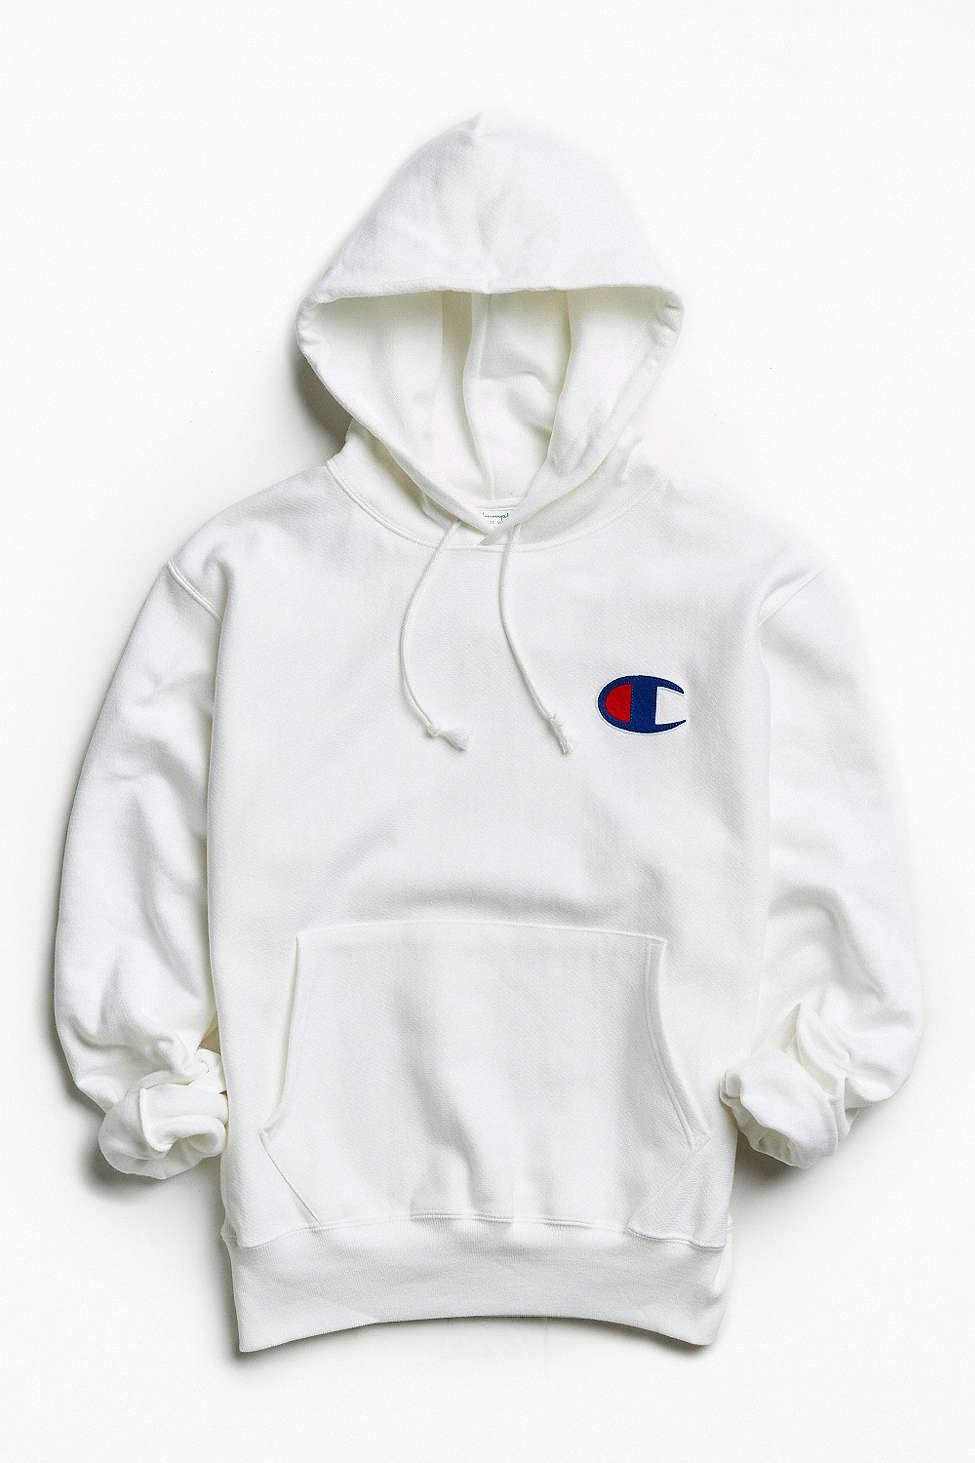 where can i buy champion hoodies near me